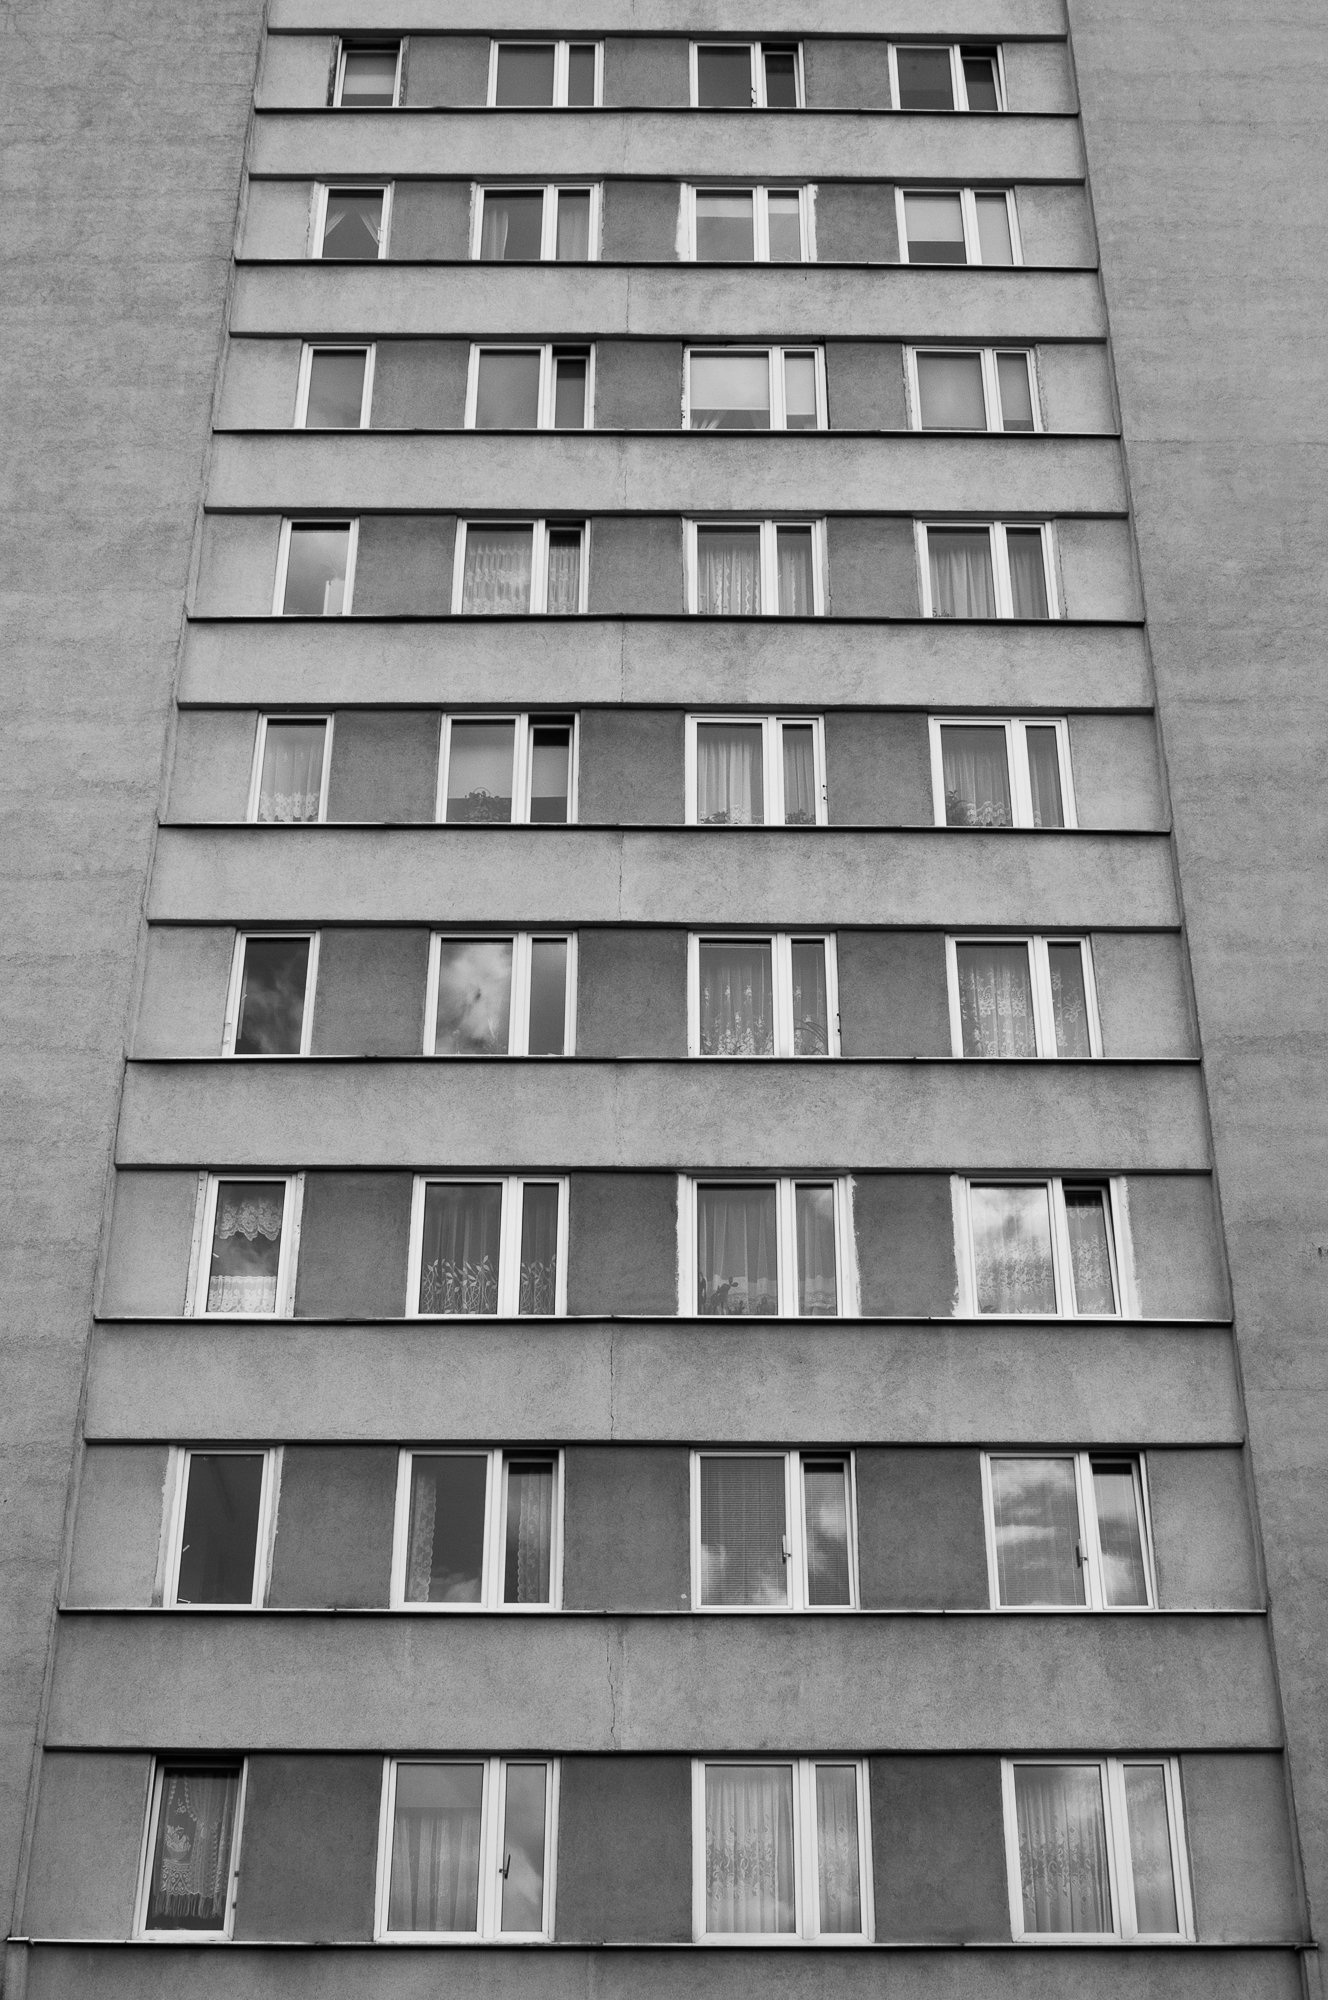 Adam Mazek Photography Warsaw 2017. Windows. Perspective. Block of flats.